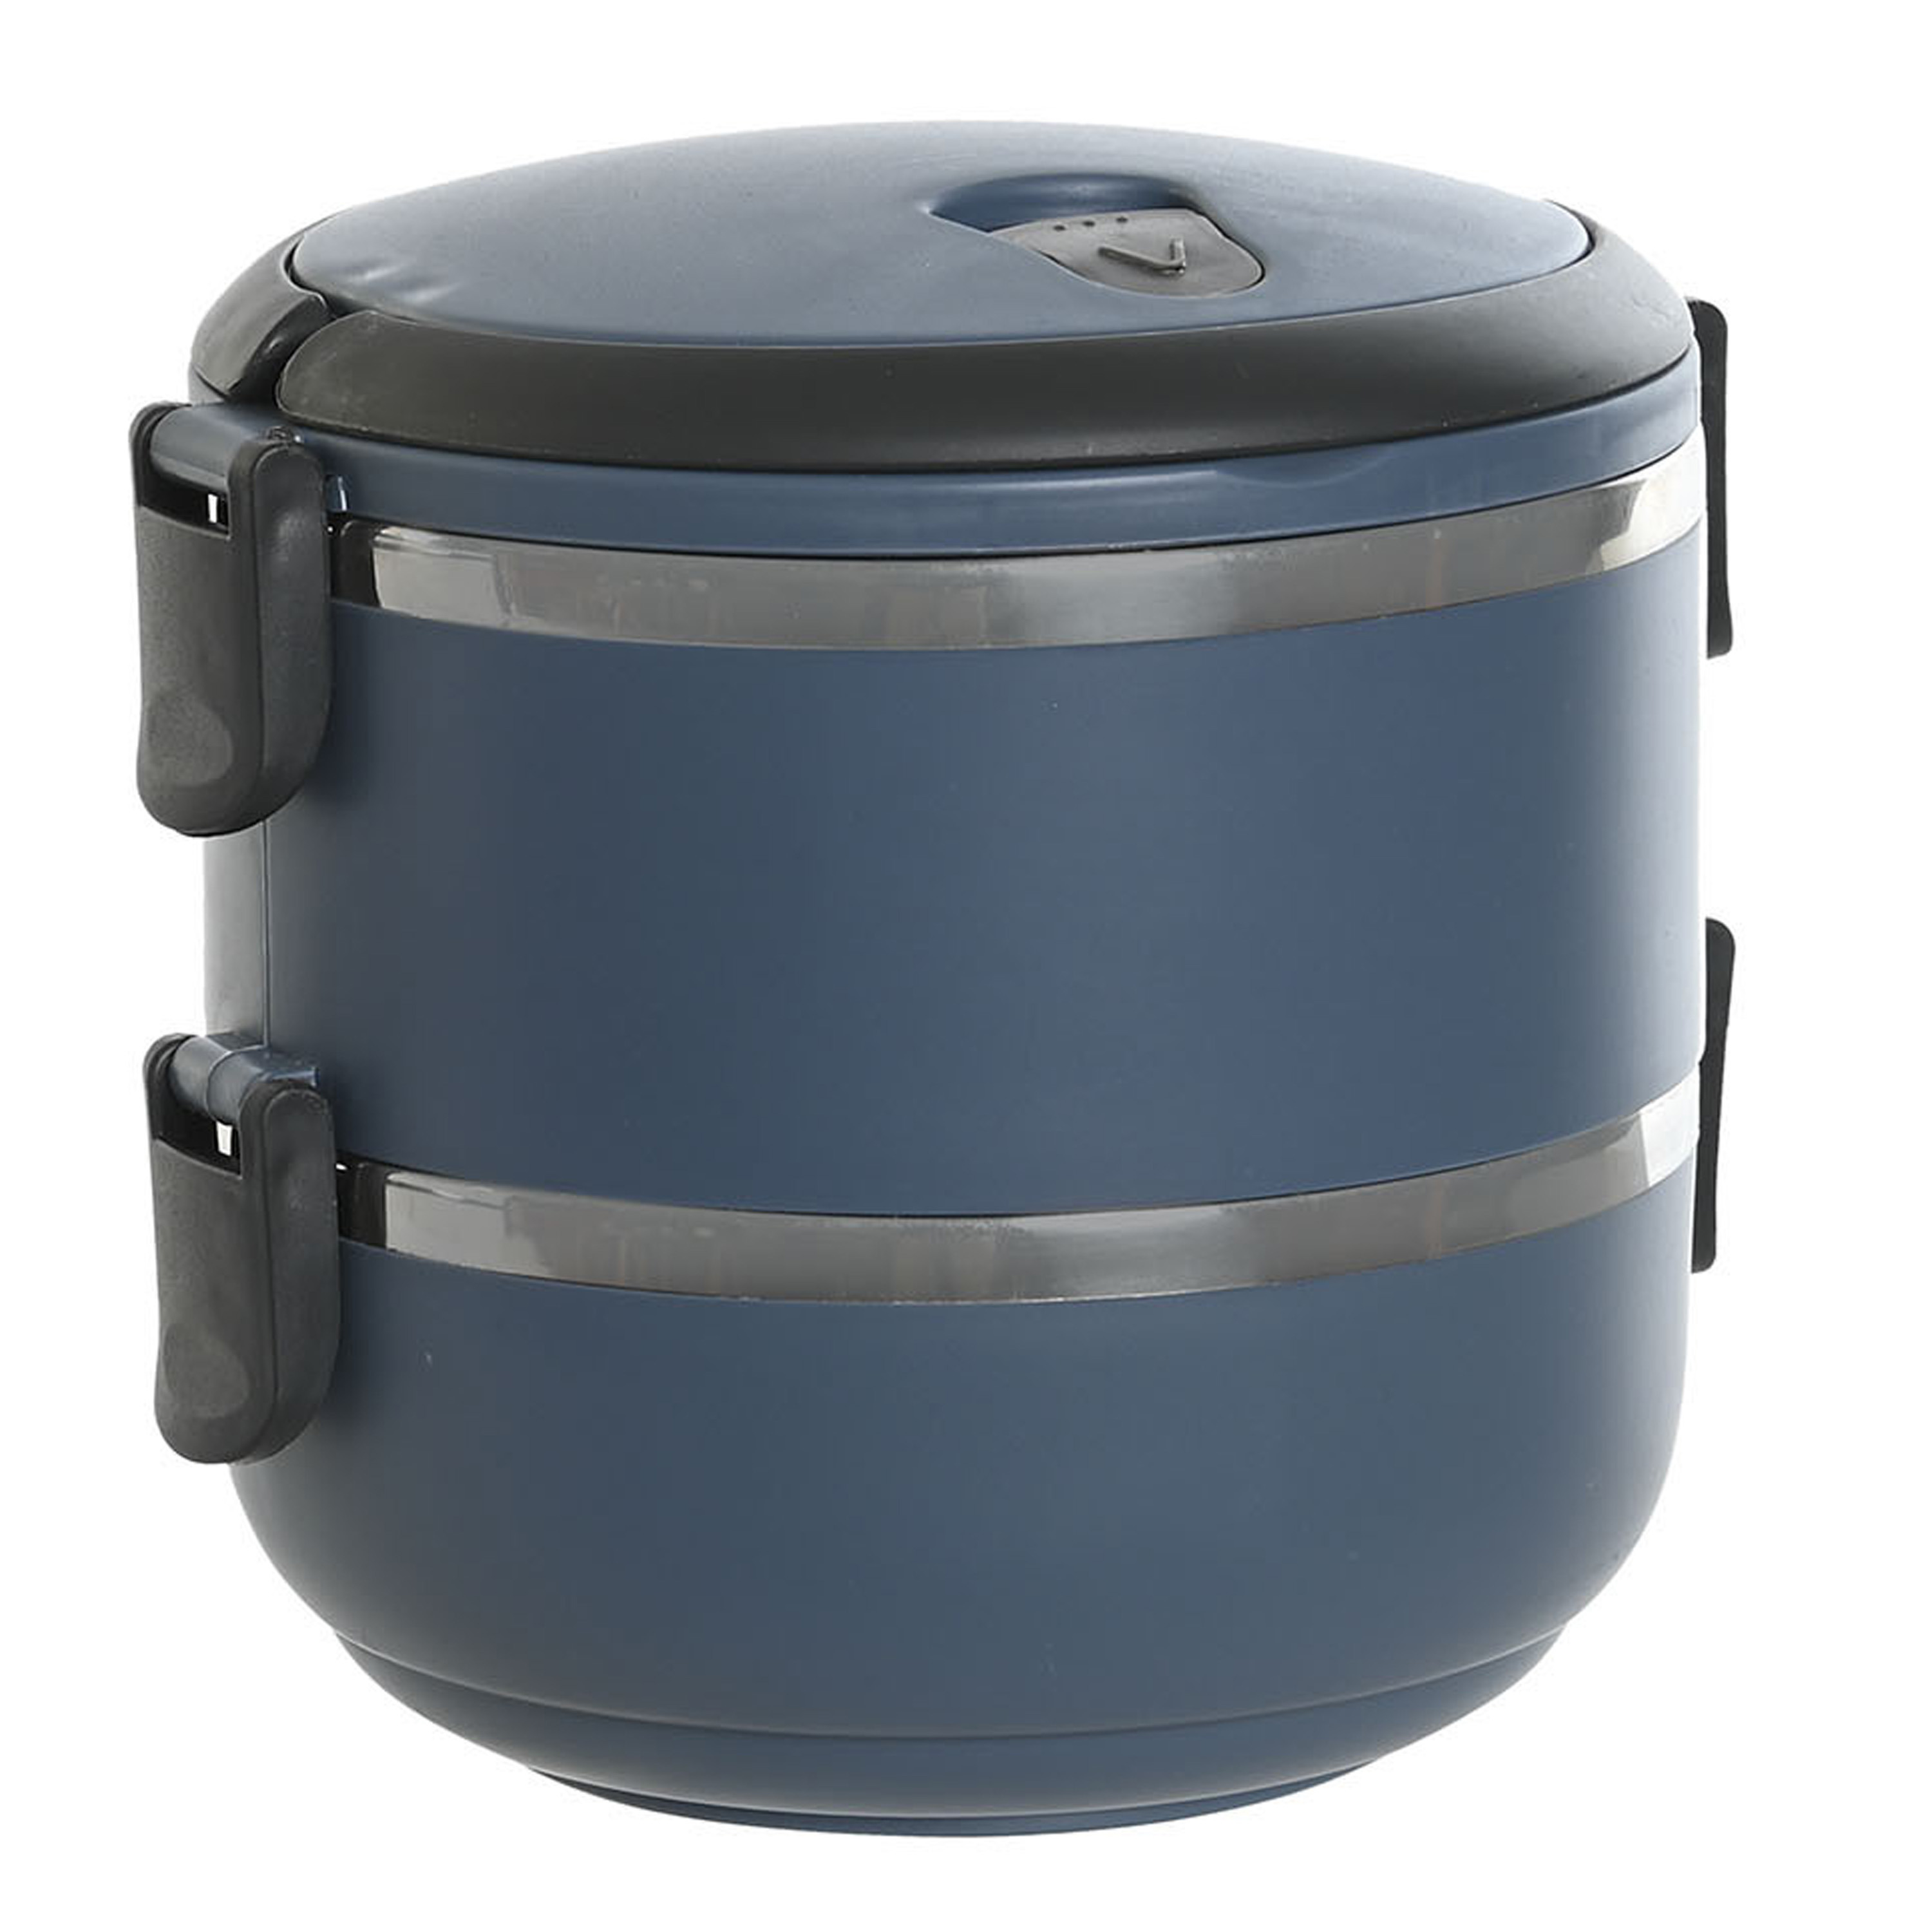 Items Stapelbare thermische lunchbox / warme maaltijd box - blauw - 16 x 15 cm